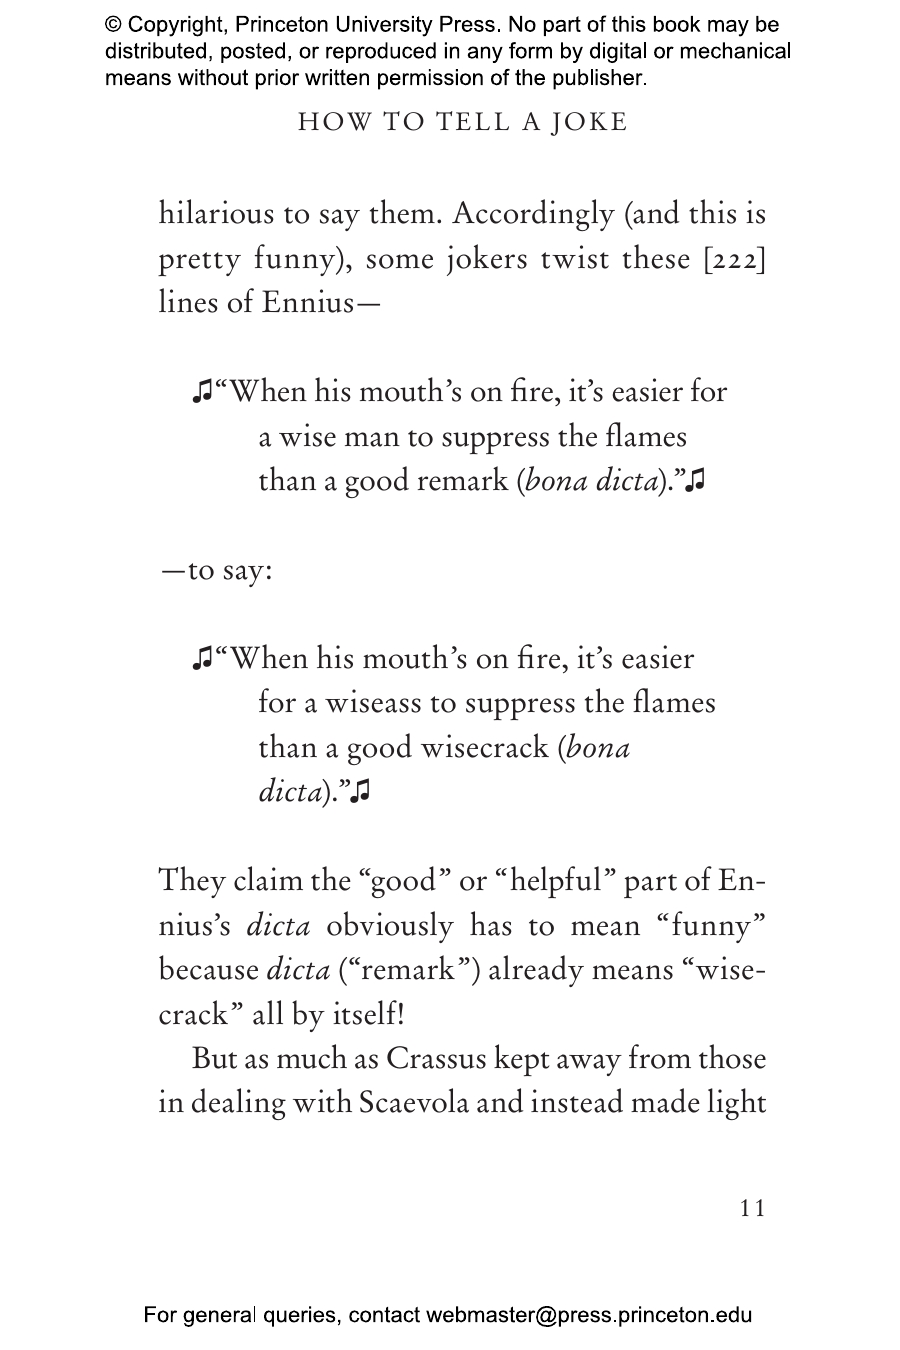 How to Tell a Joke | Princeton University Press